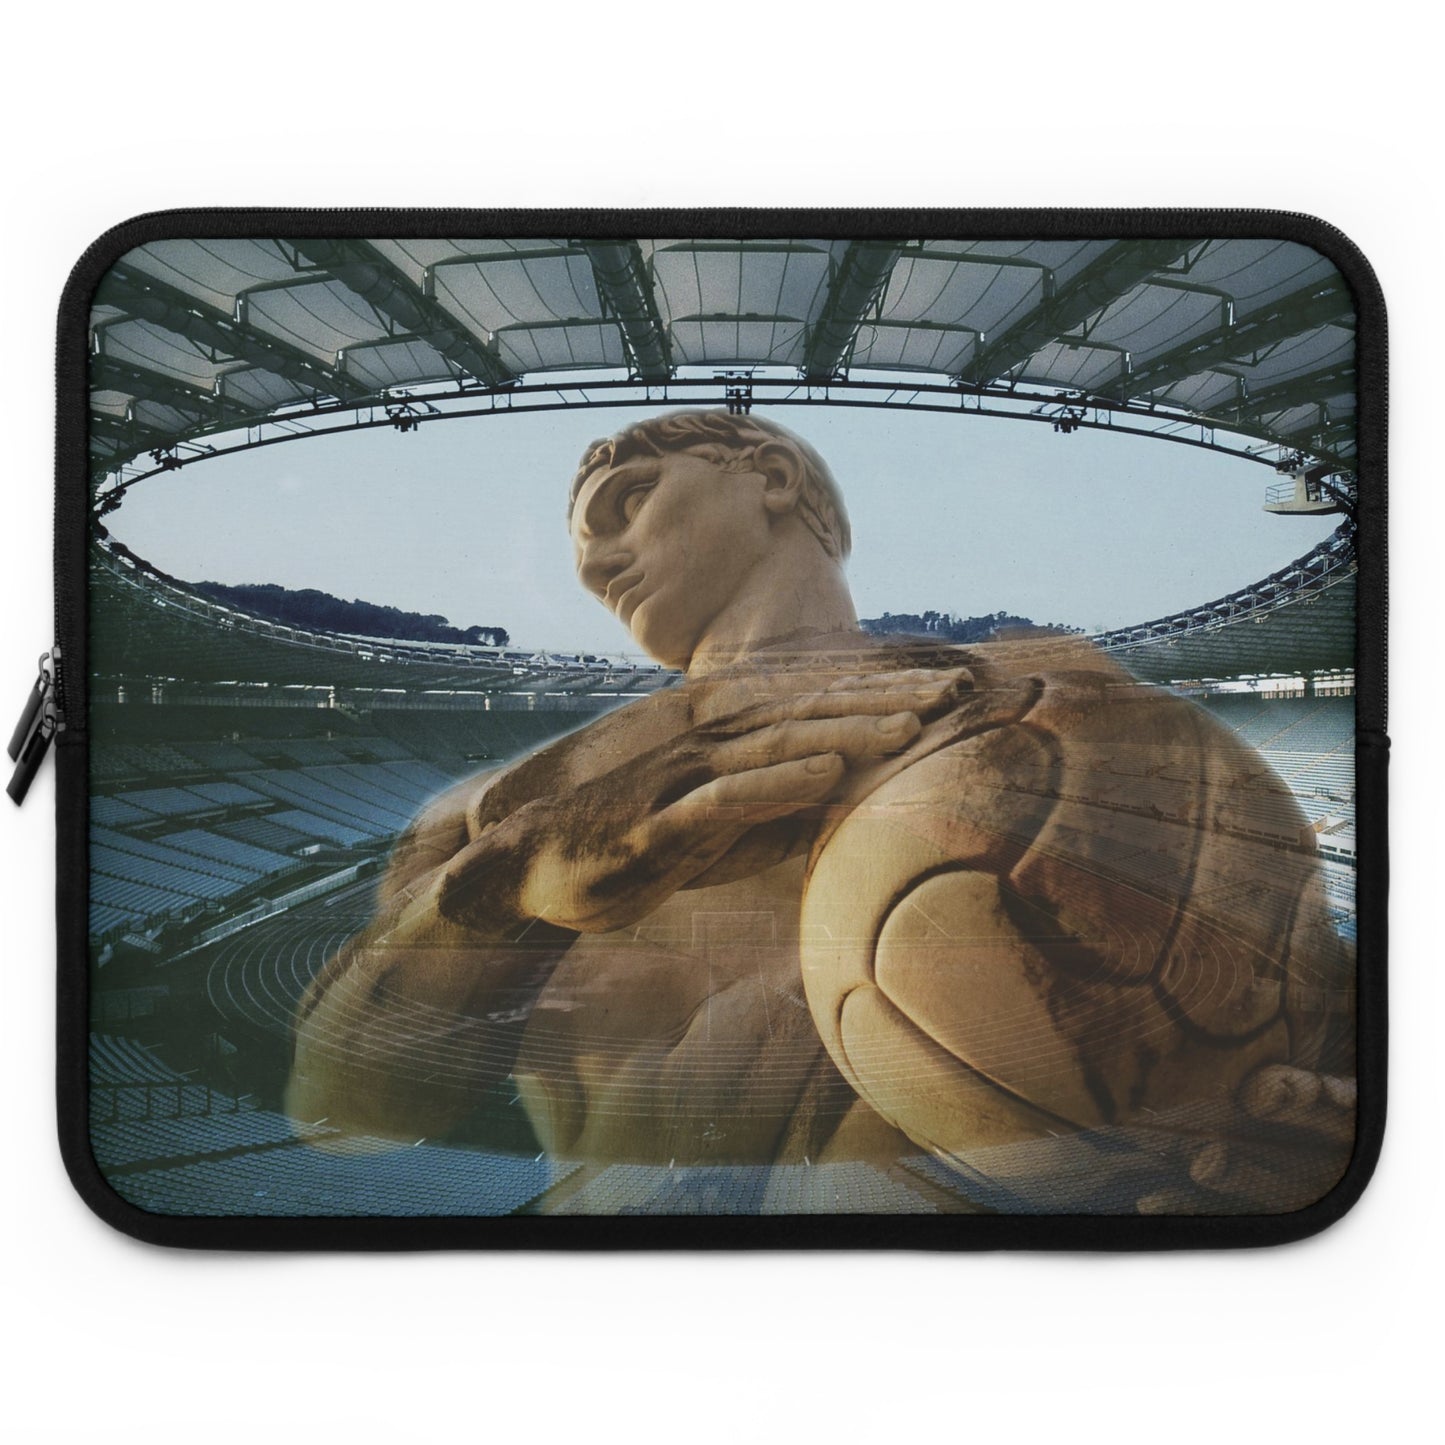 Olympic Stadium In Rome Laptop Sleeve